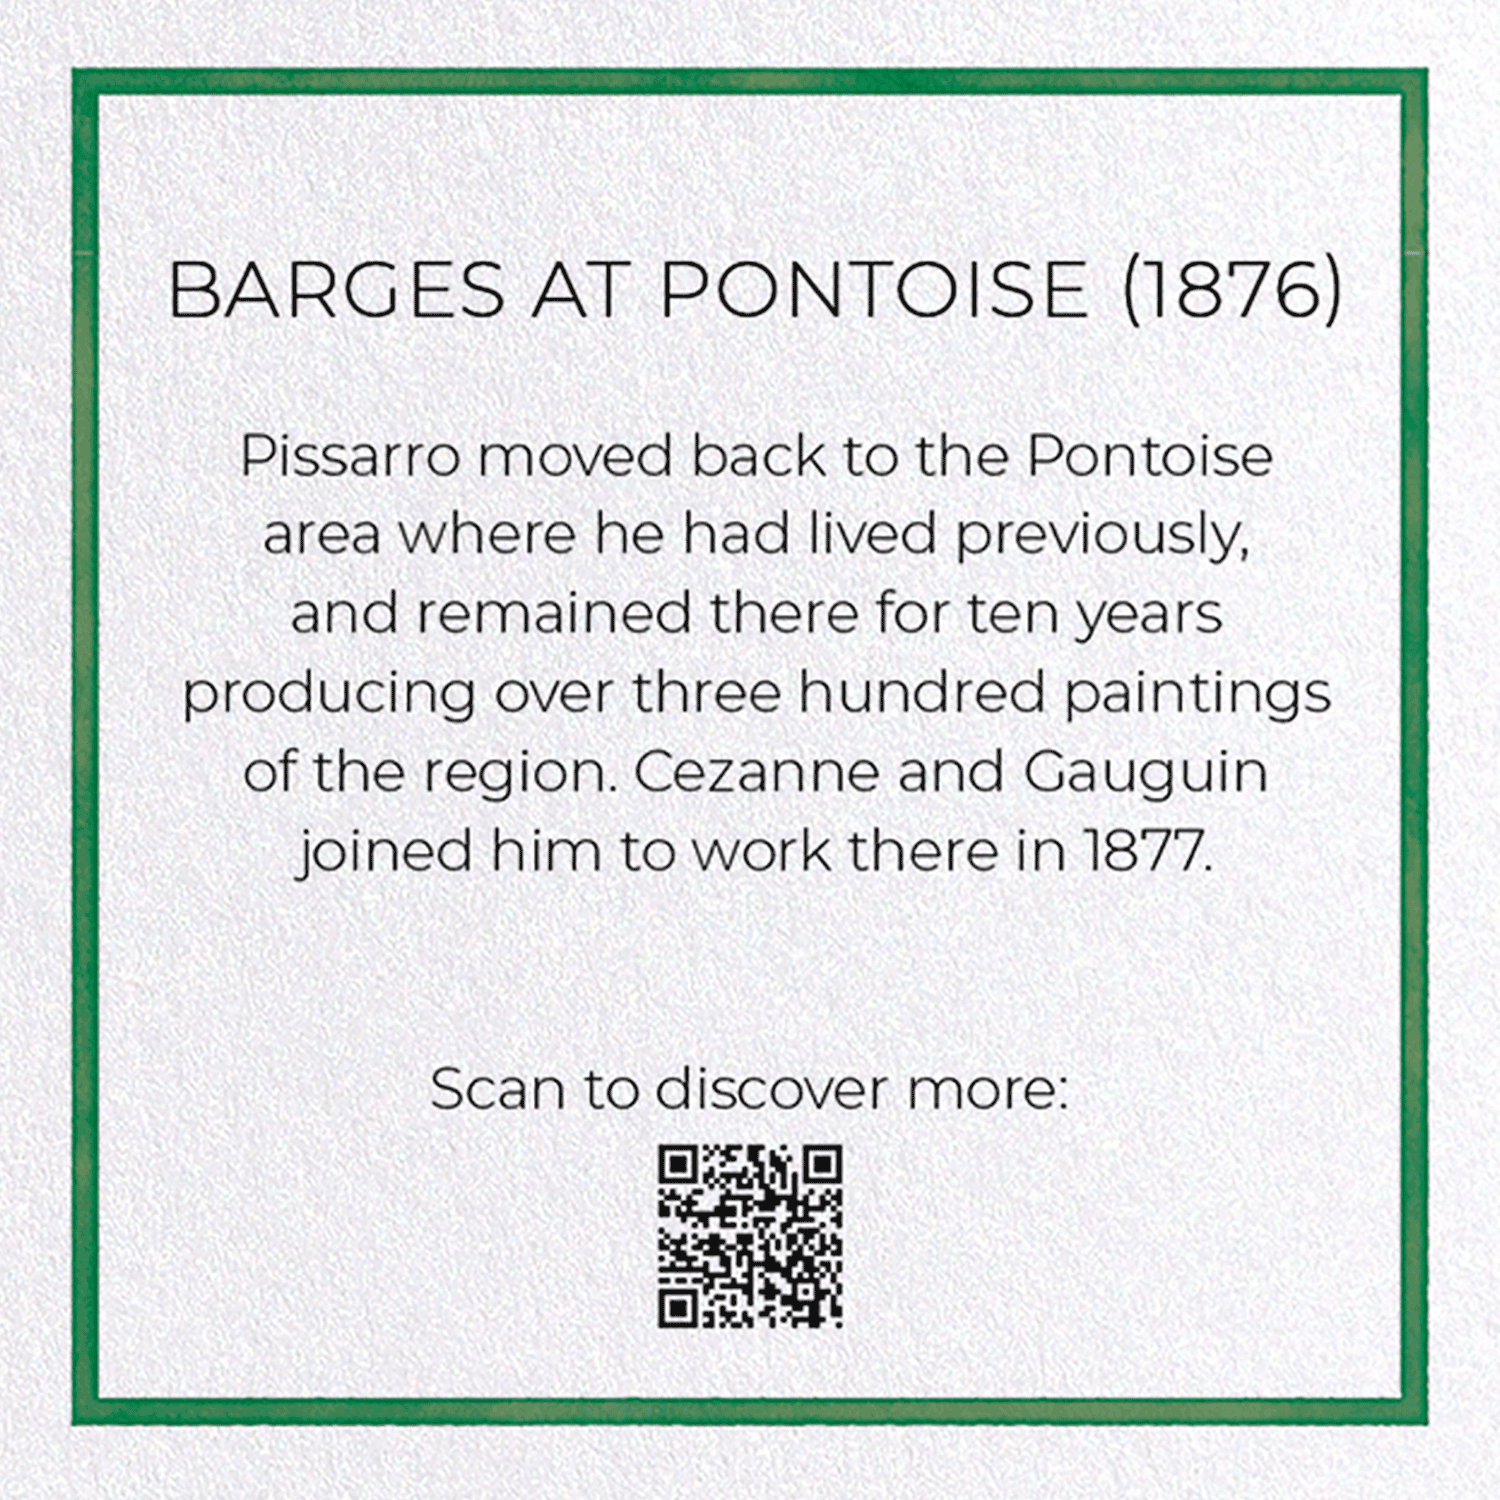 BARGES AT PONTOISE (1876)